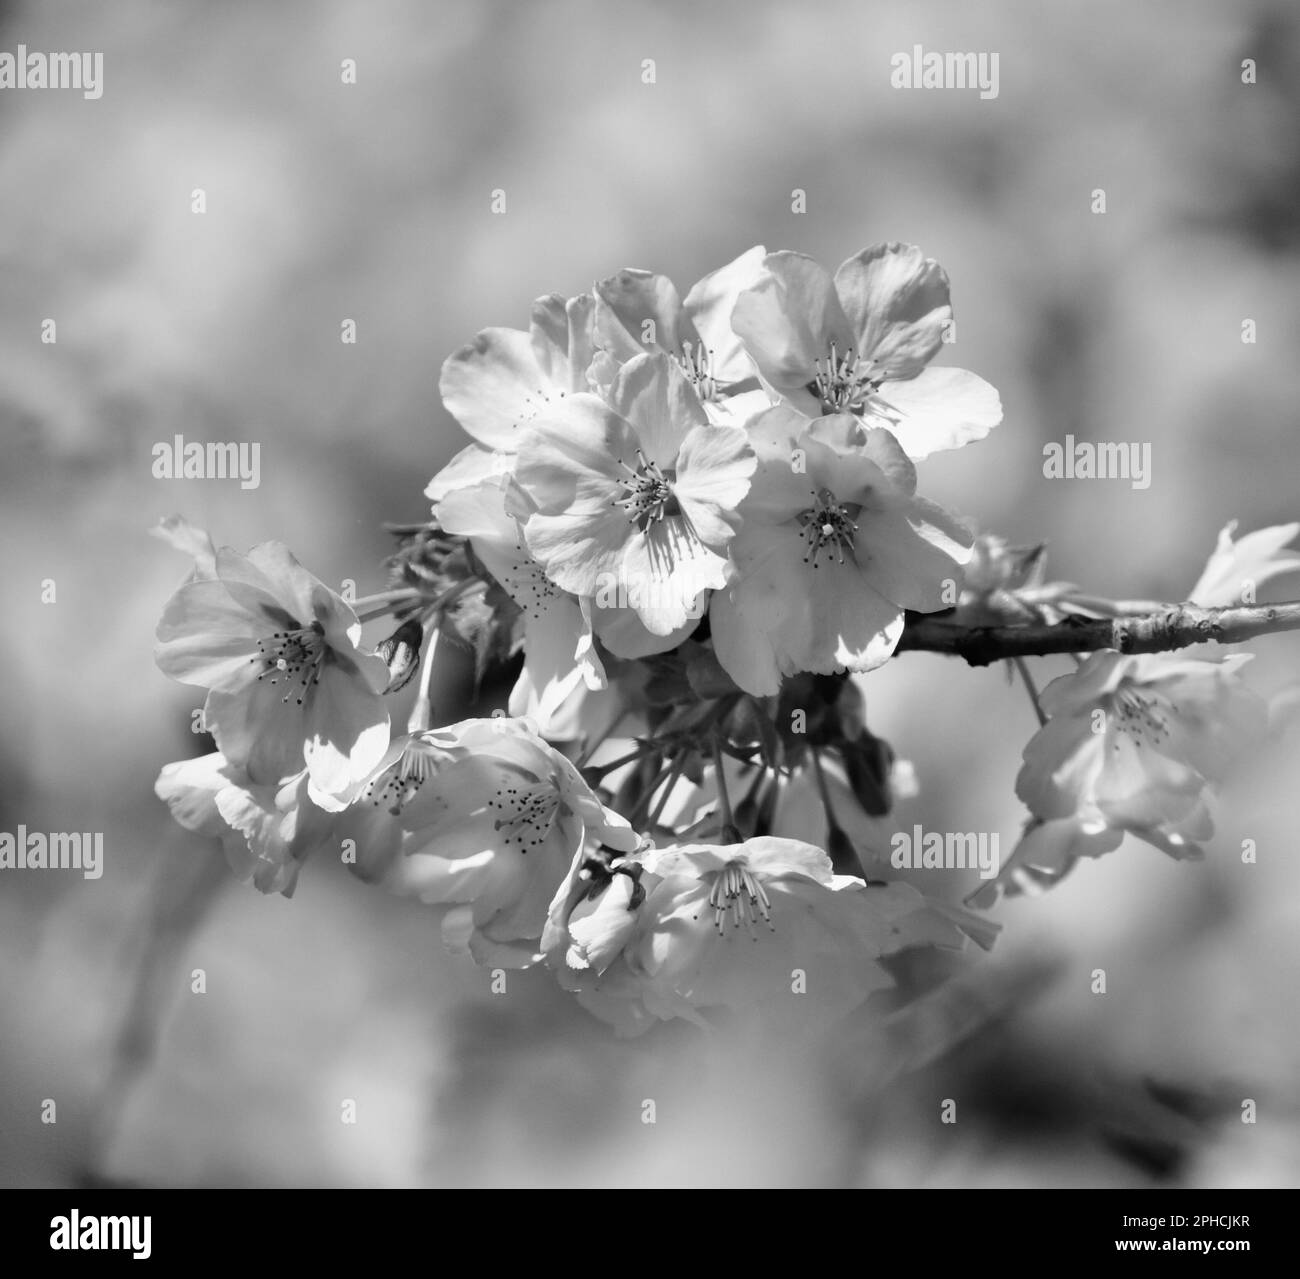 White Cherry blossom Stock Photo - Alamy